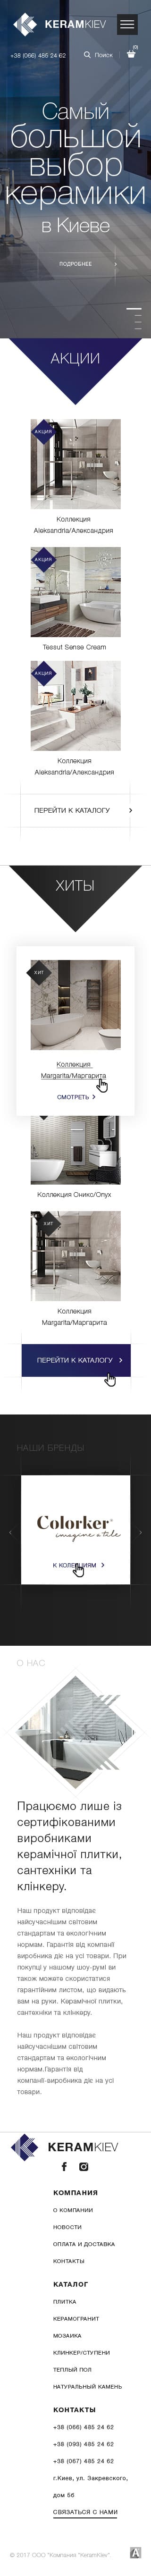 Интернет-магазин «KeramKiev»